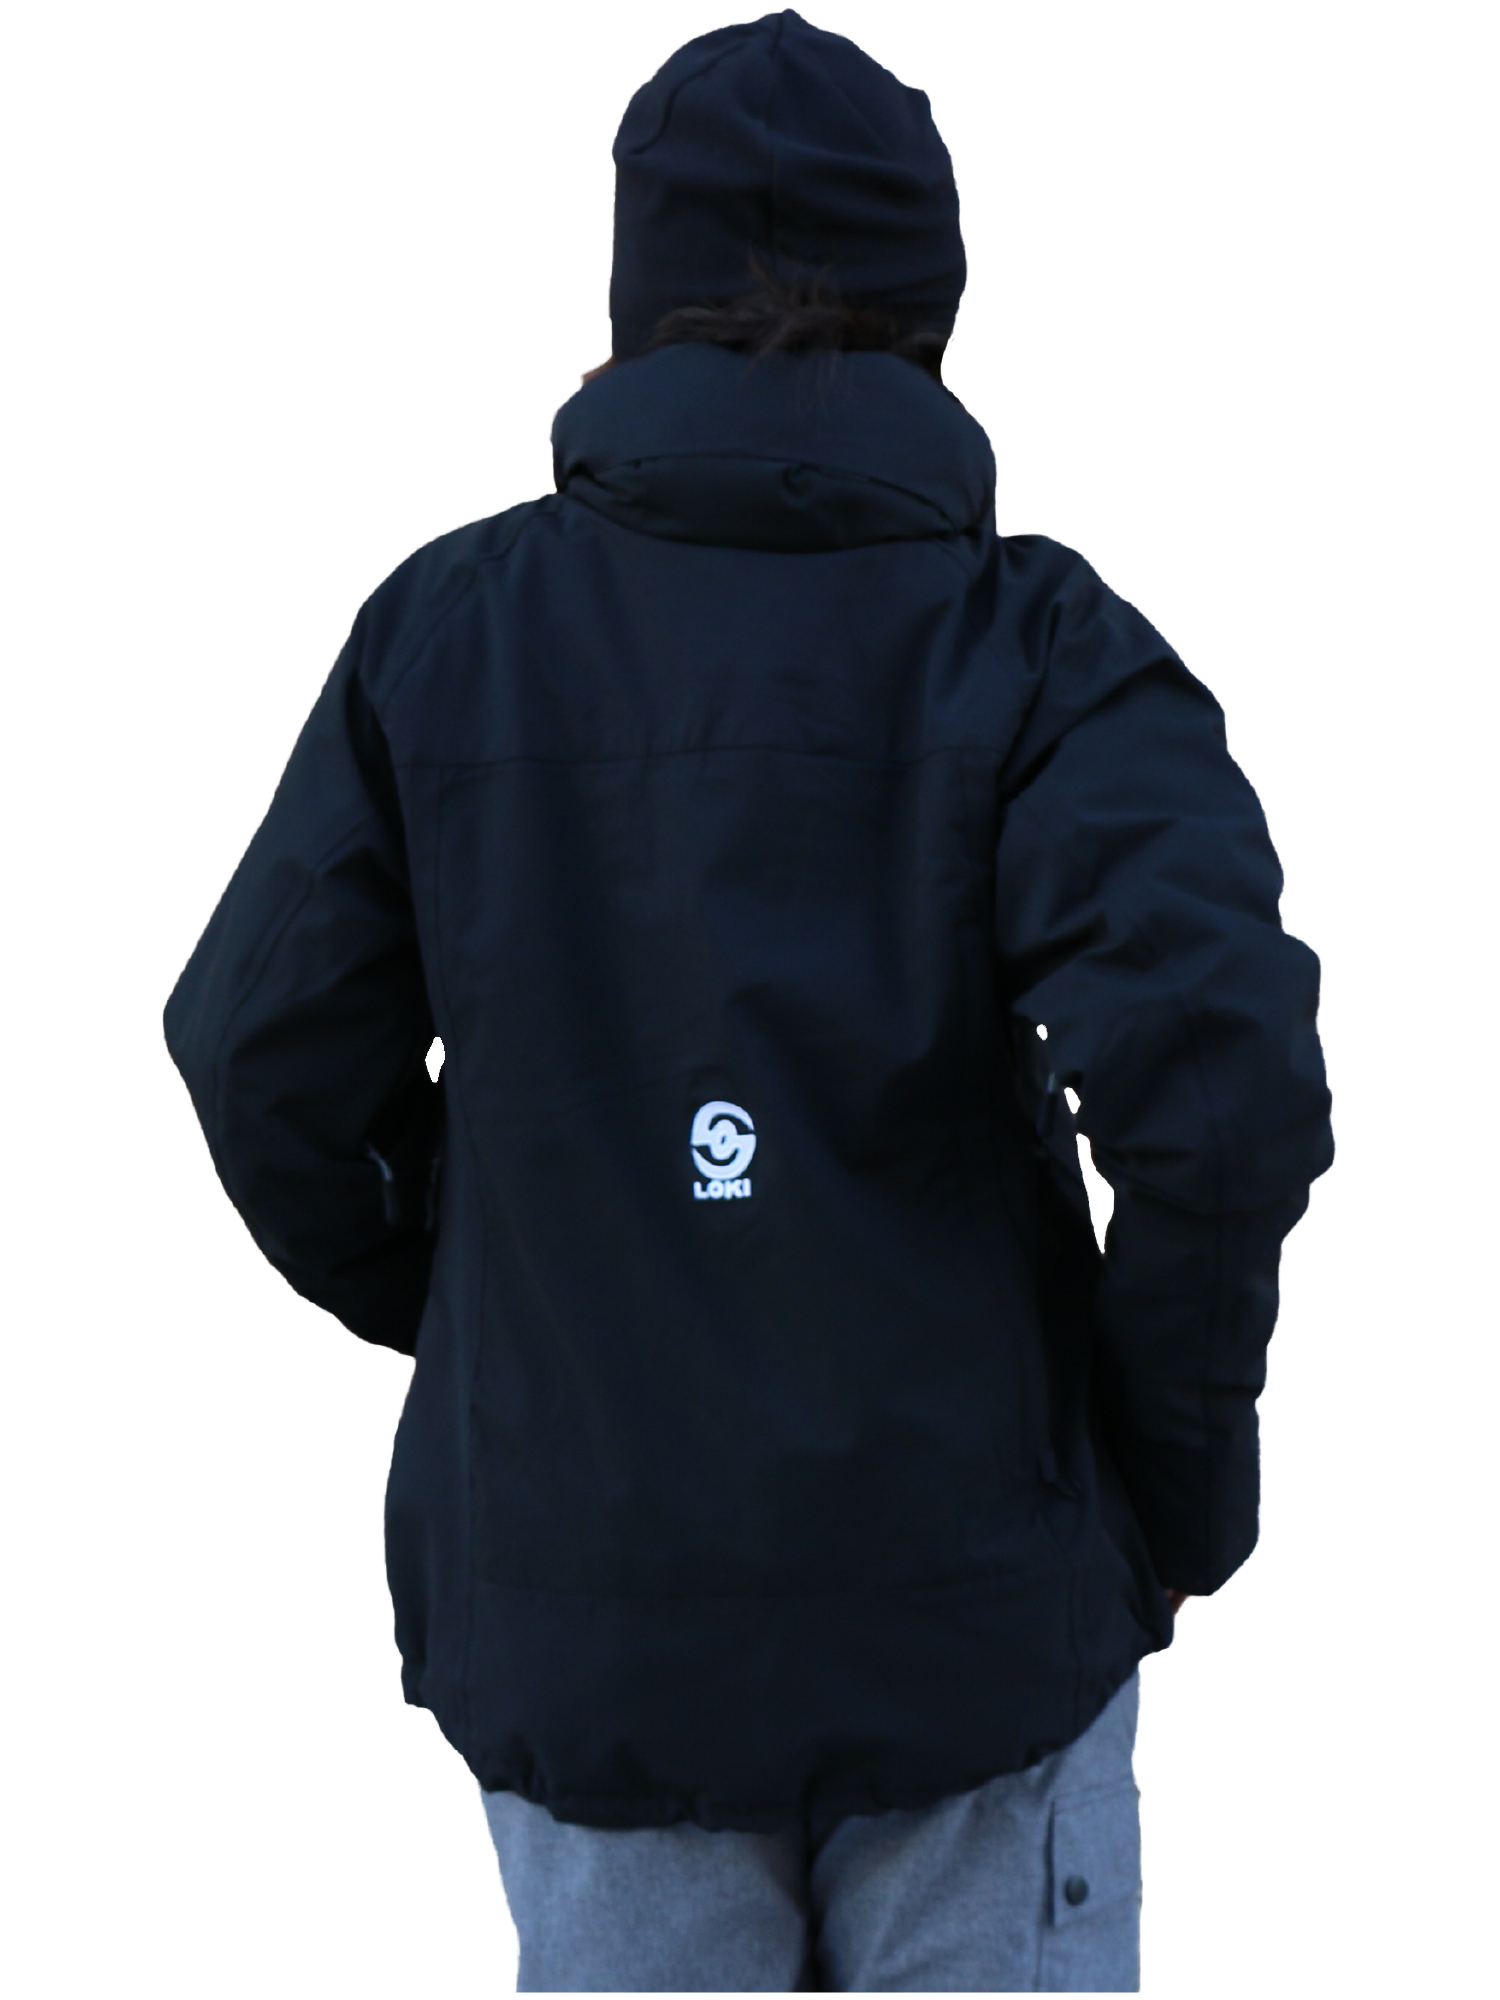 Woman's Meta Snow Sport Jacket - Black (Back)